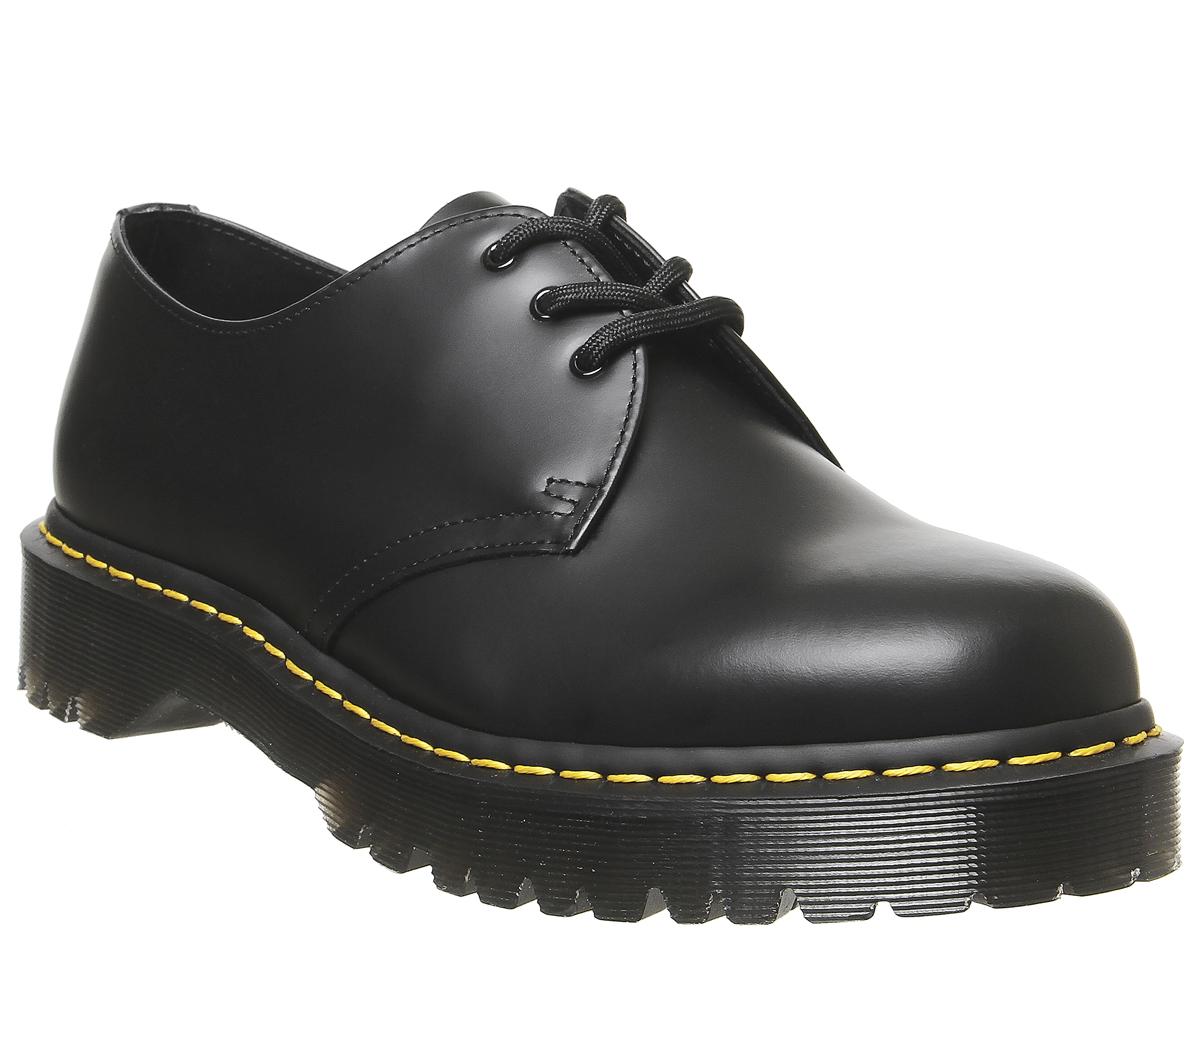 Dr. Martens 1461 Bex Shoes Black - Smart